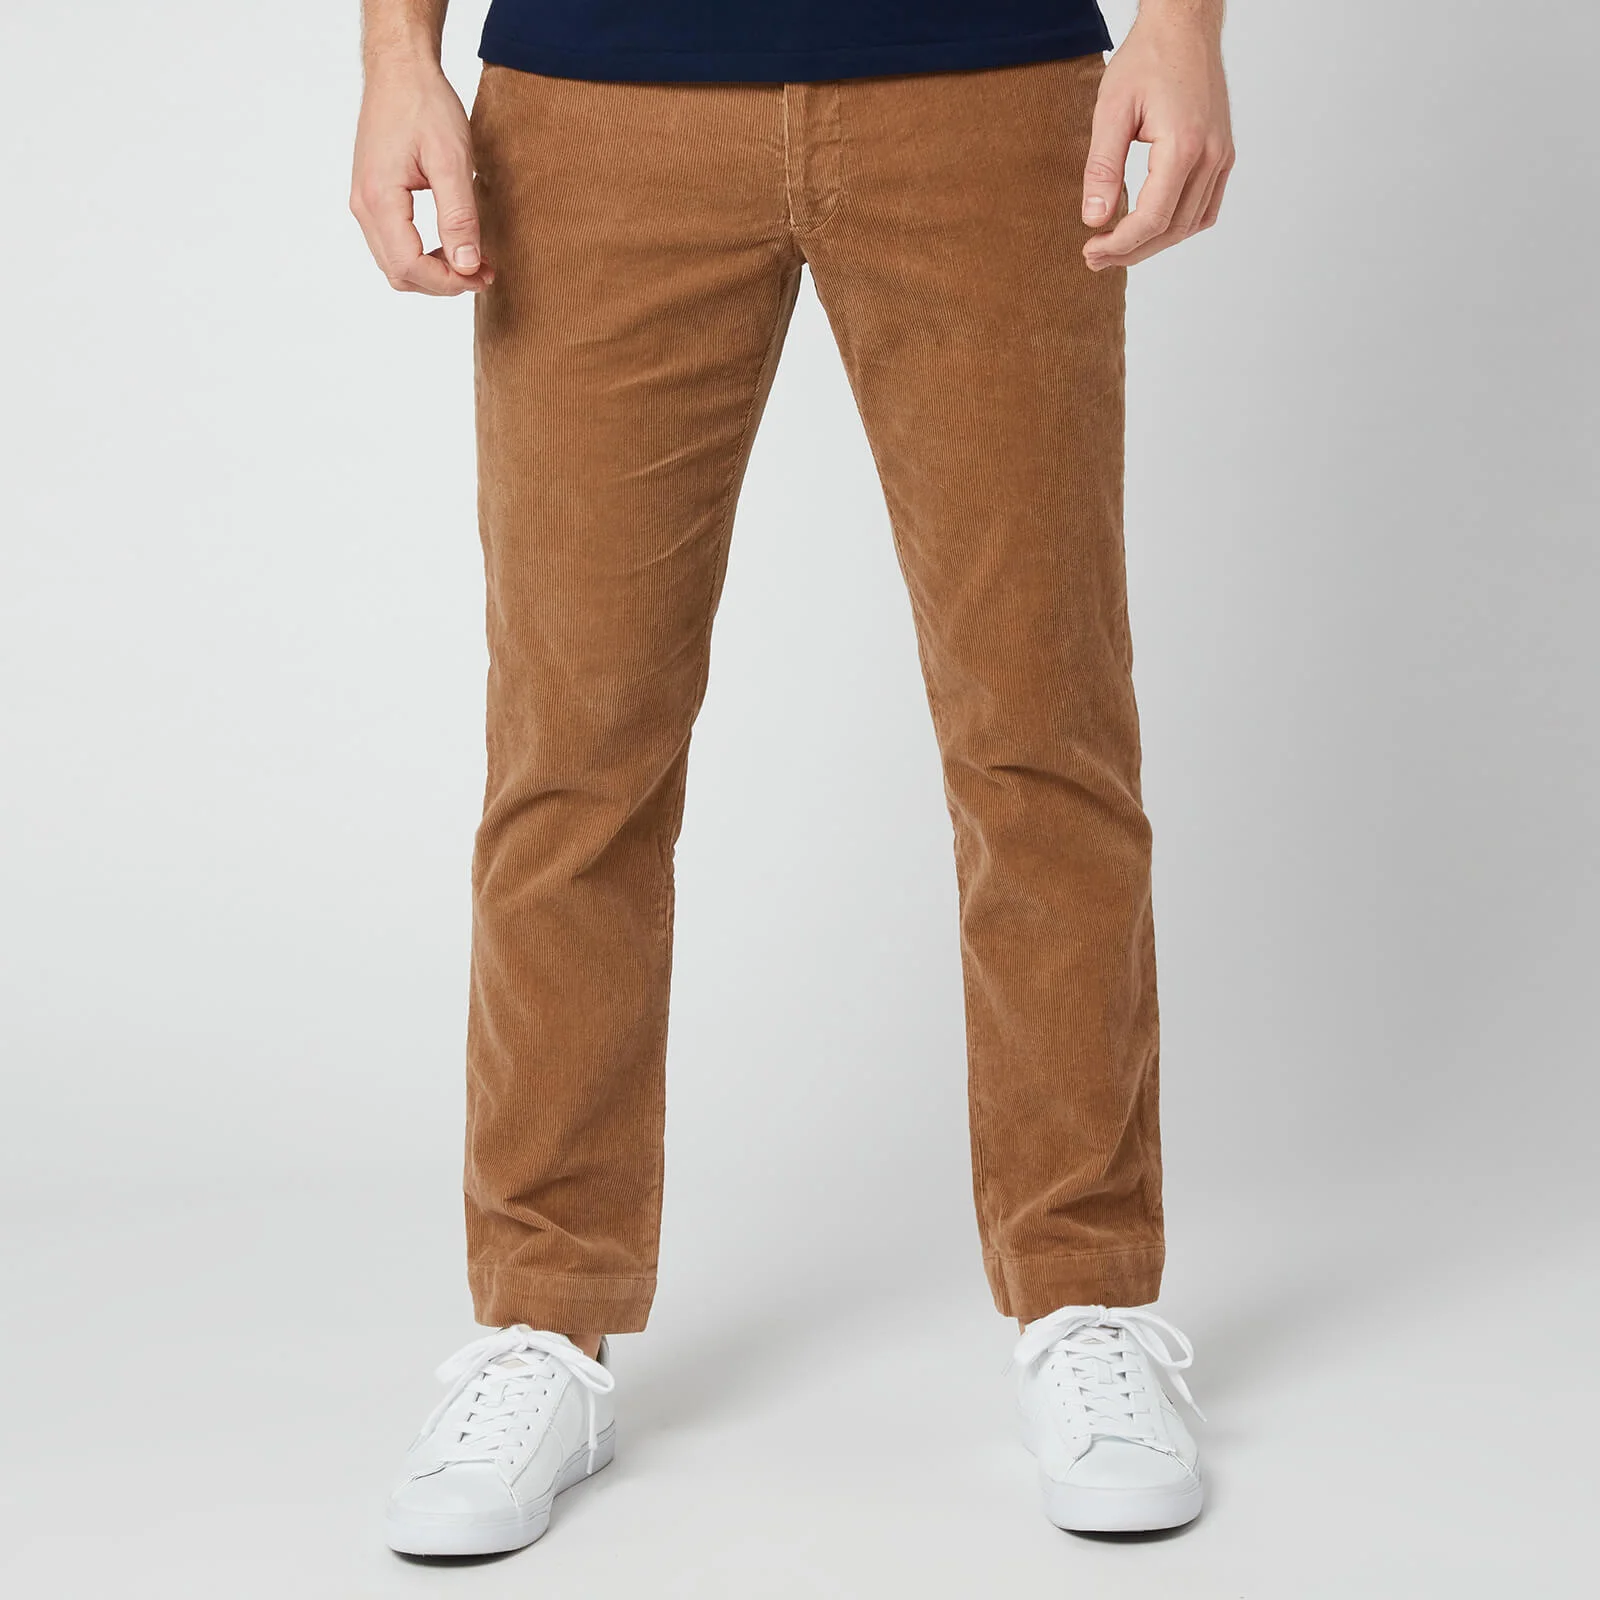 Polo Ralph Lauren Men's Slim Fit Cord Trousers - Montana Khaki Image 1